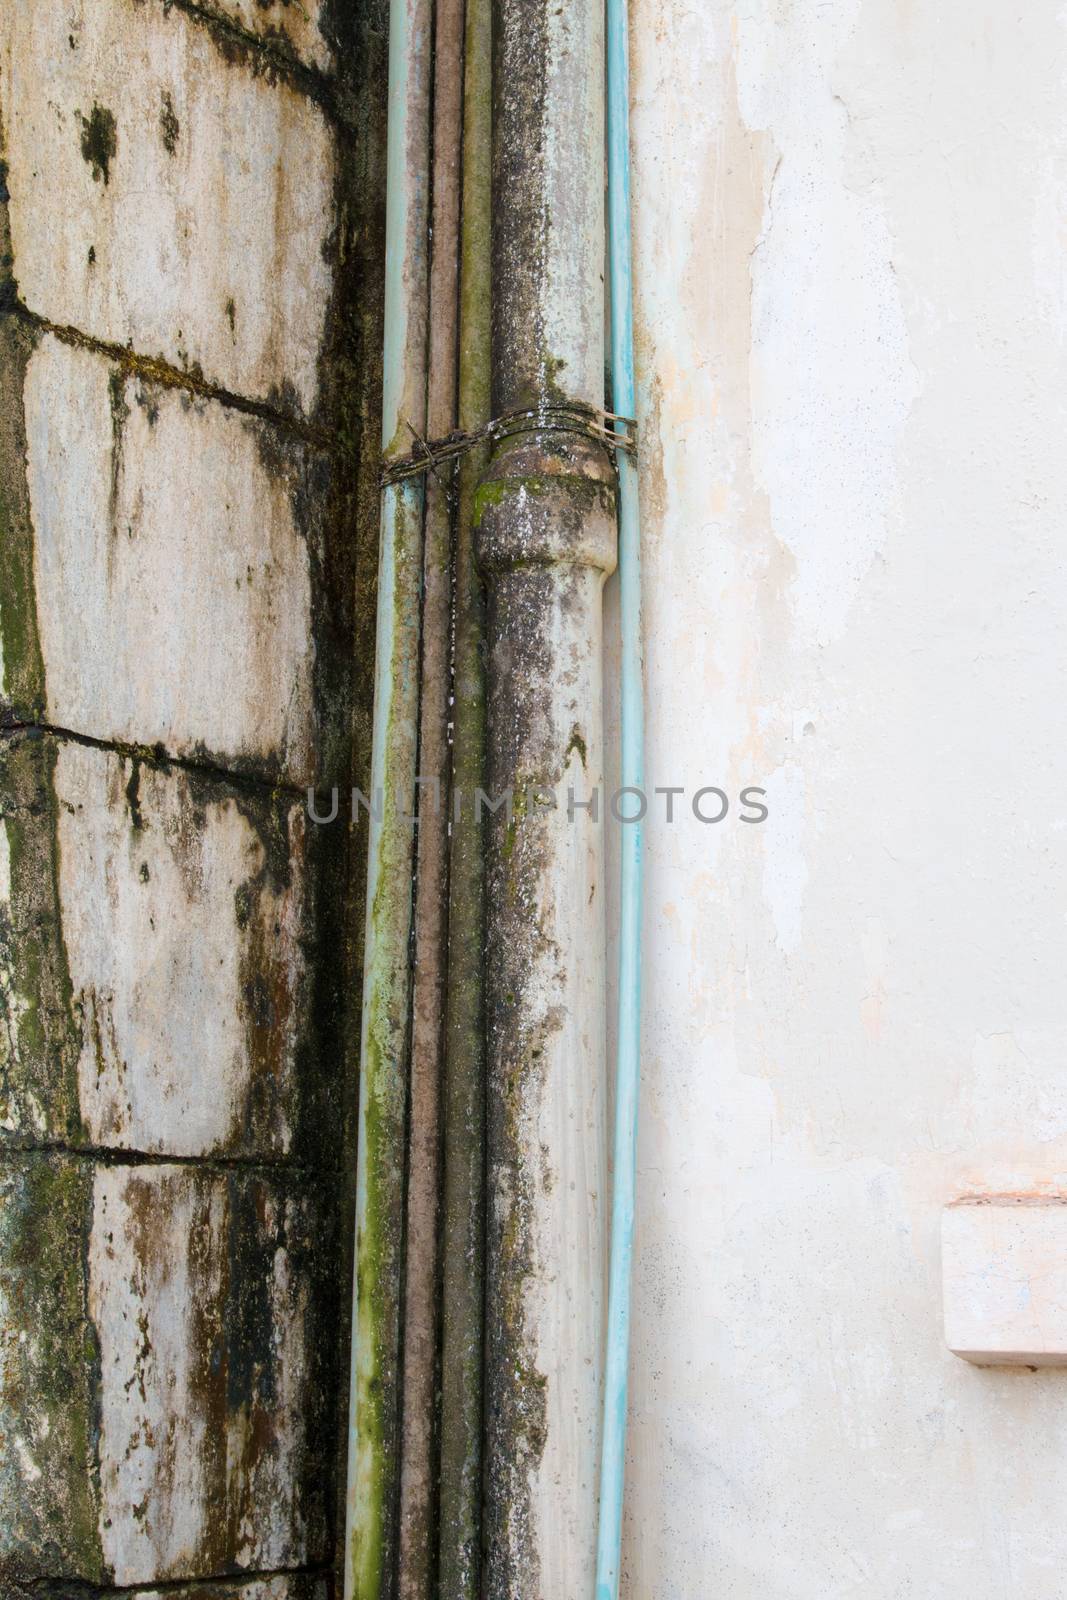 gutter metal rain drain pipe on the wall by N_u_T